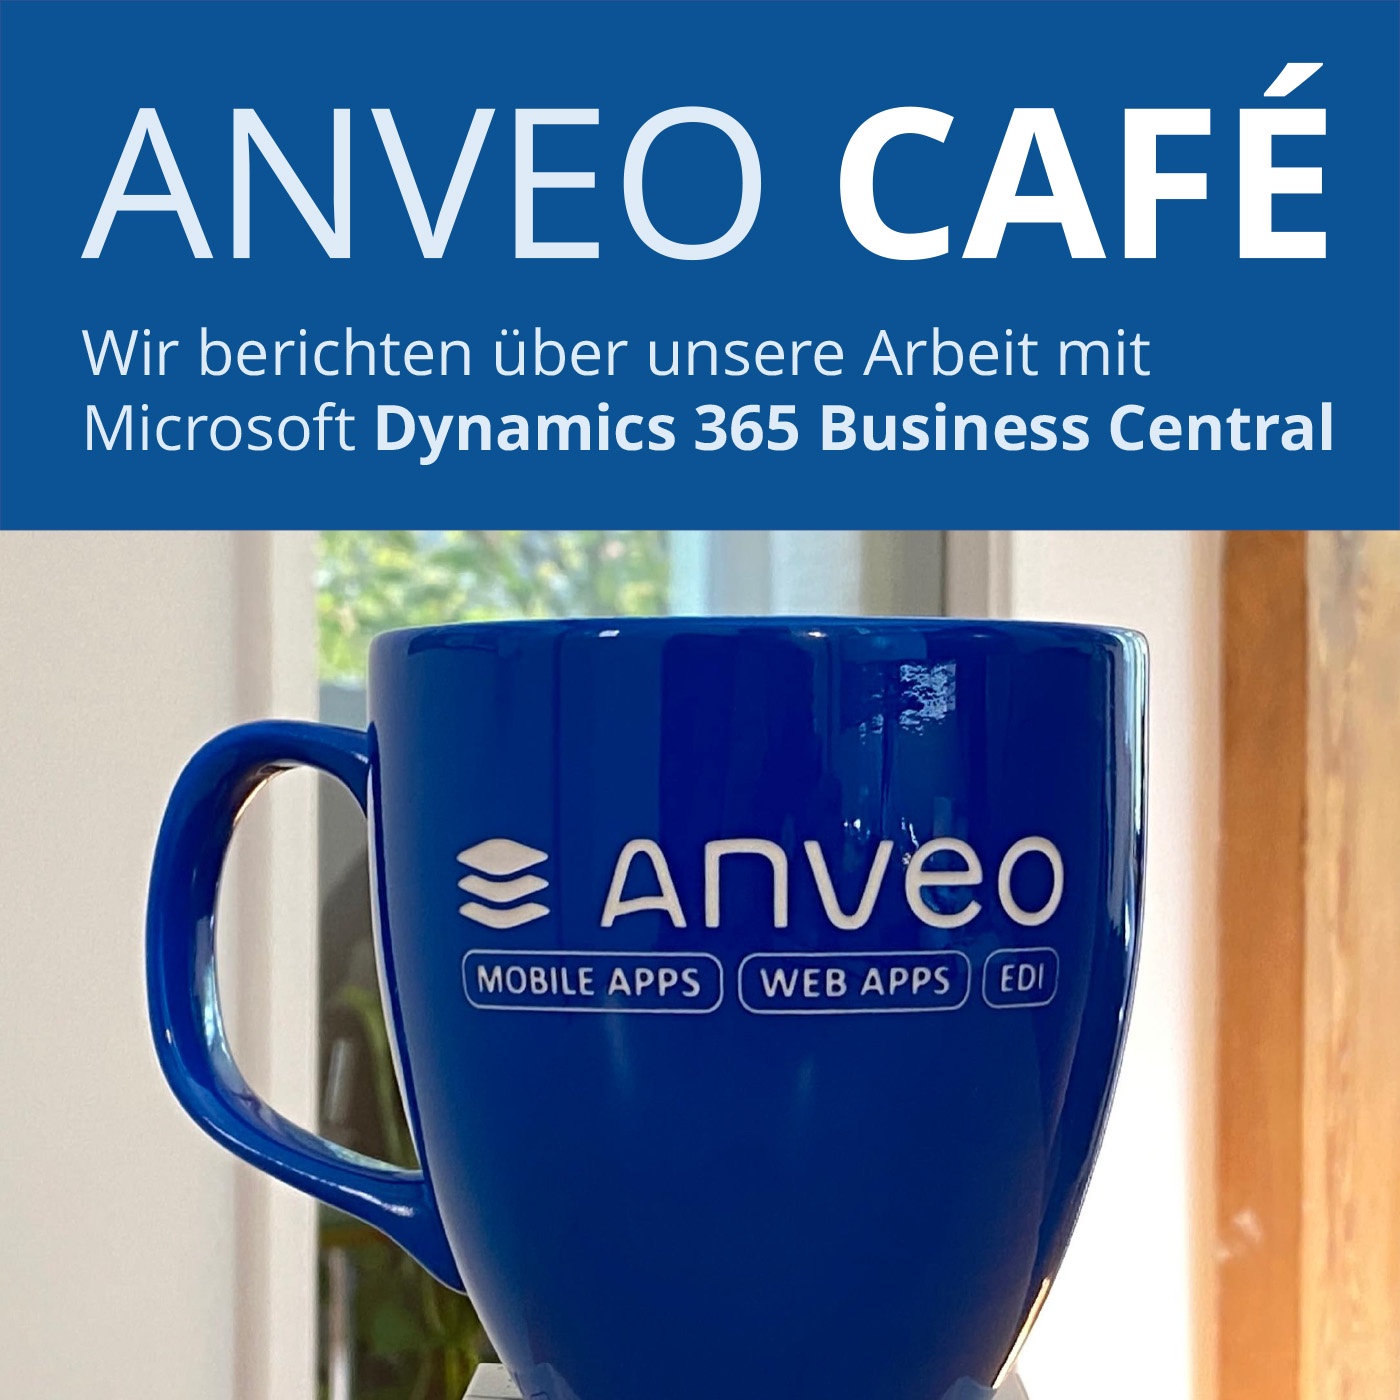 #10 Anveo Café: So waren die Extension Experts!